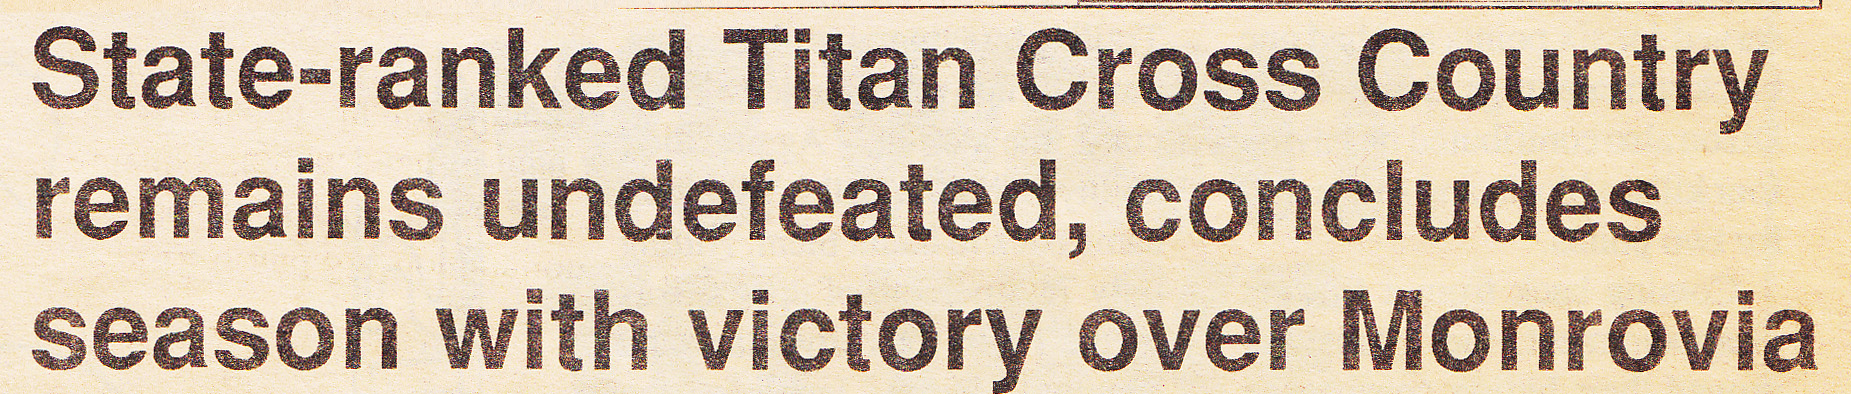 1990-10-25 - Headline from Titan Shield